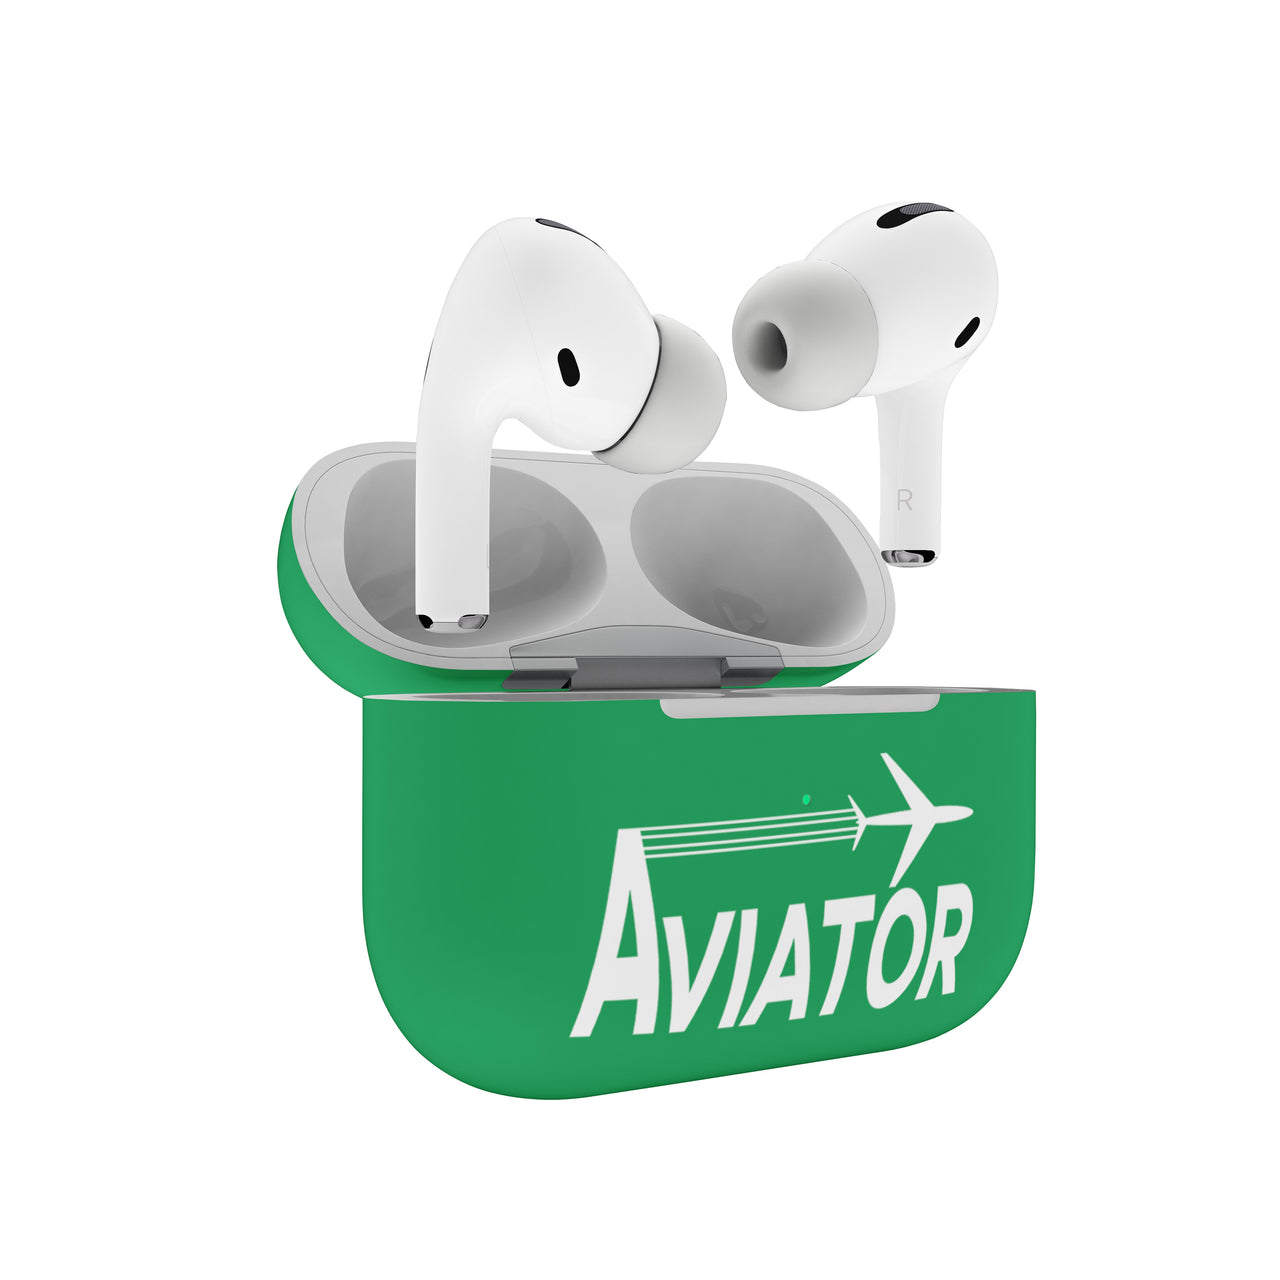 Aviator Designed AirPods "Pro" Cases